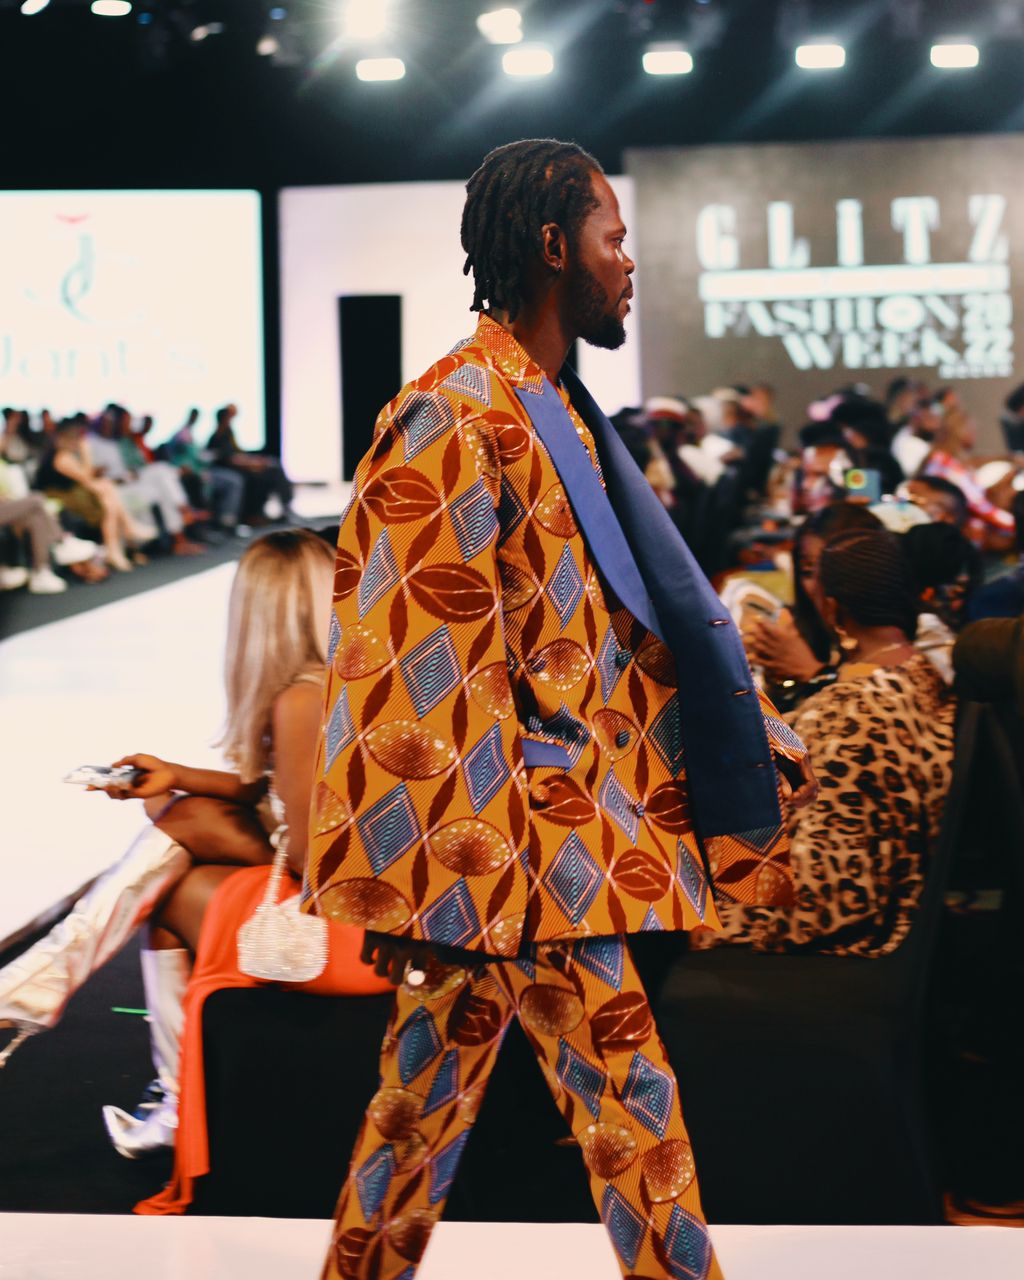 Fameye walks the runway at Glitz Africa Fashion Weekend